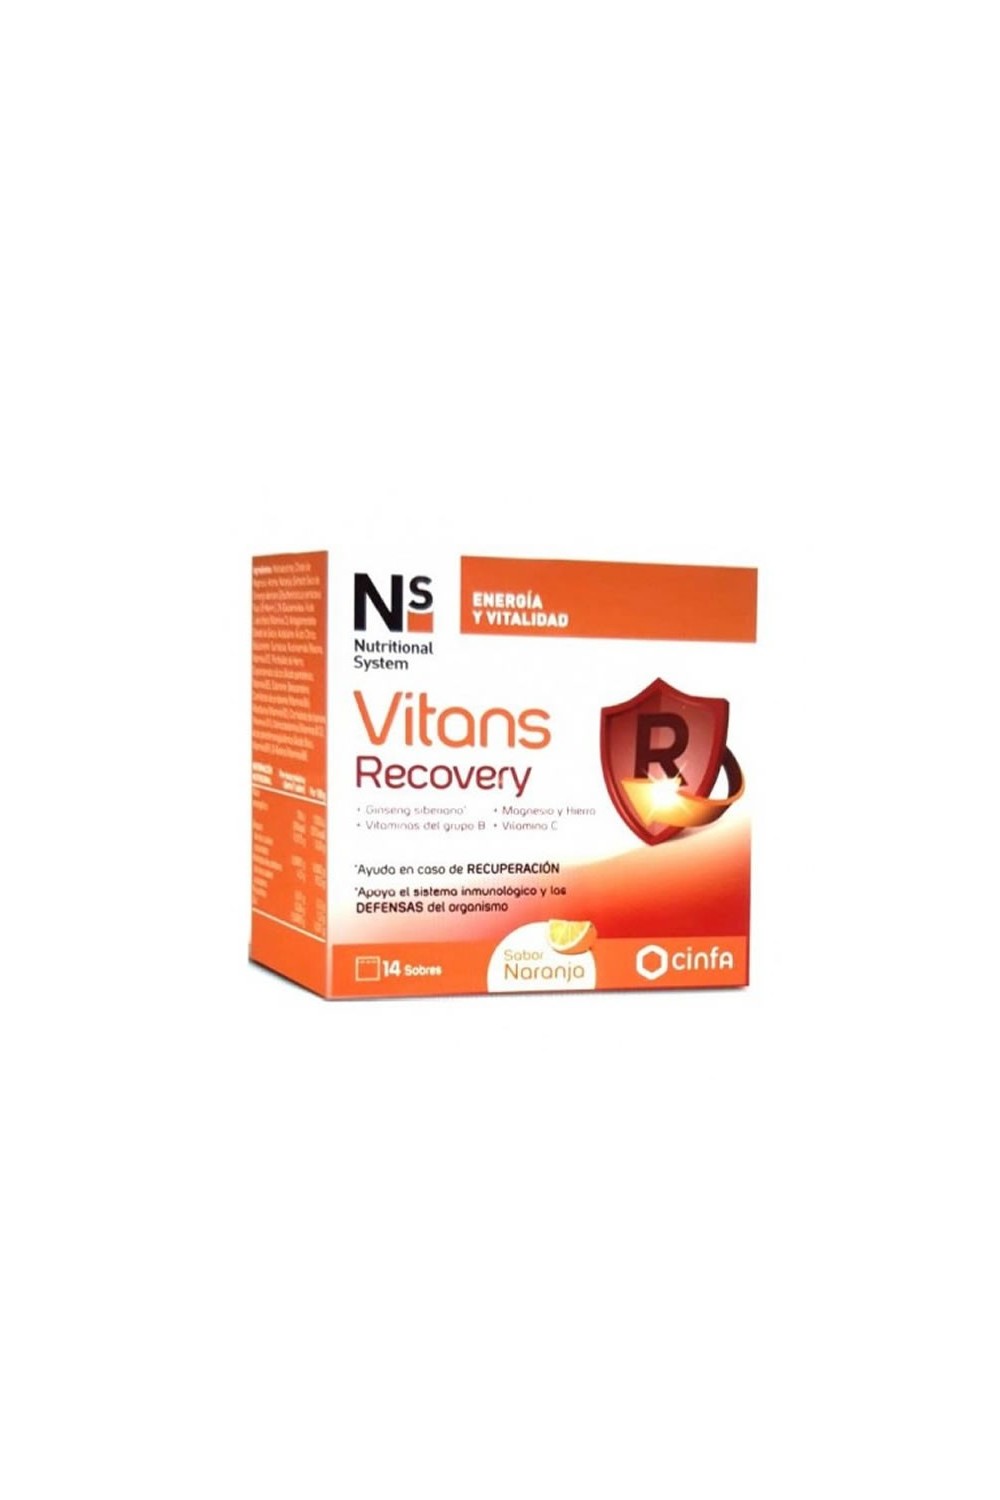 NS Vitans Recovery 14 Sachets